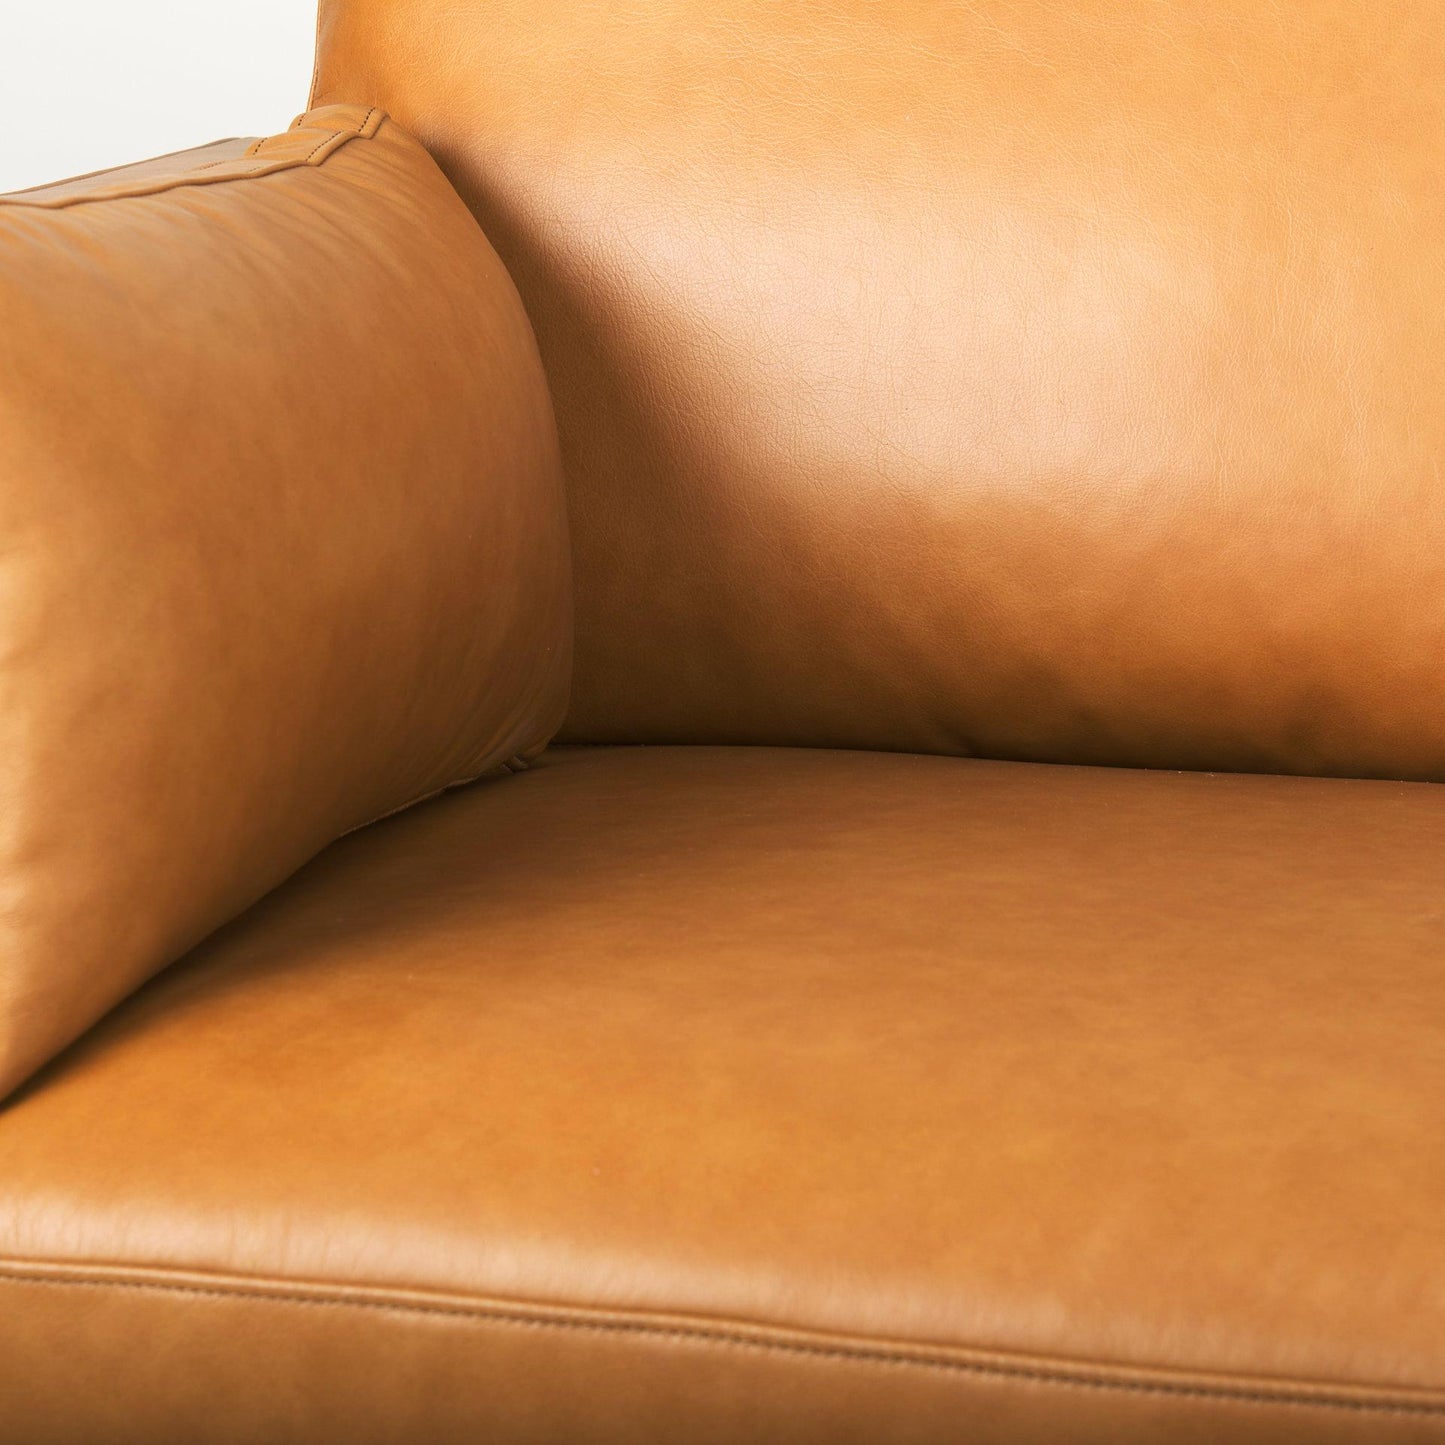 Elton 65.0L x 37.8W x 34.6H Tan Leather Love Seat Sofa